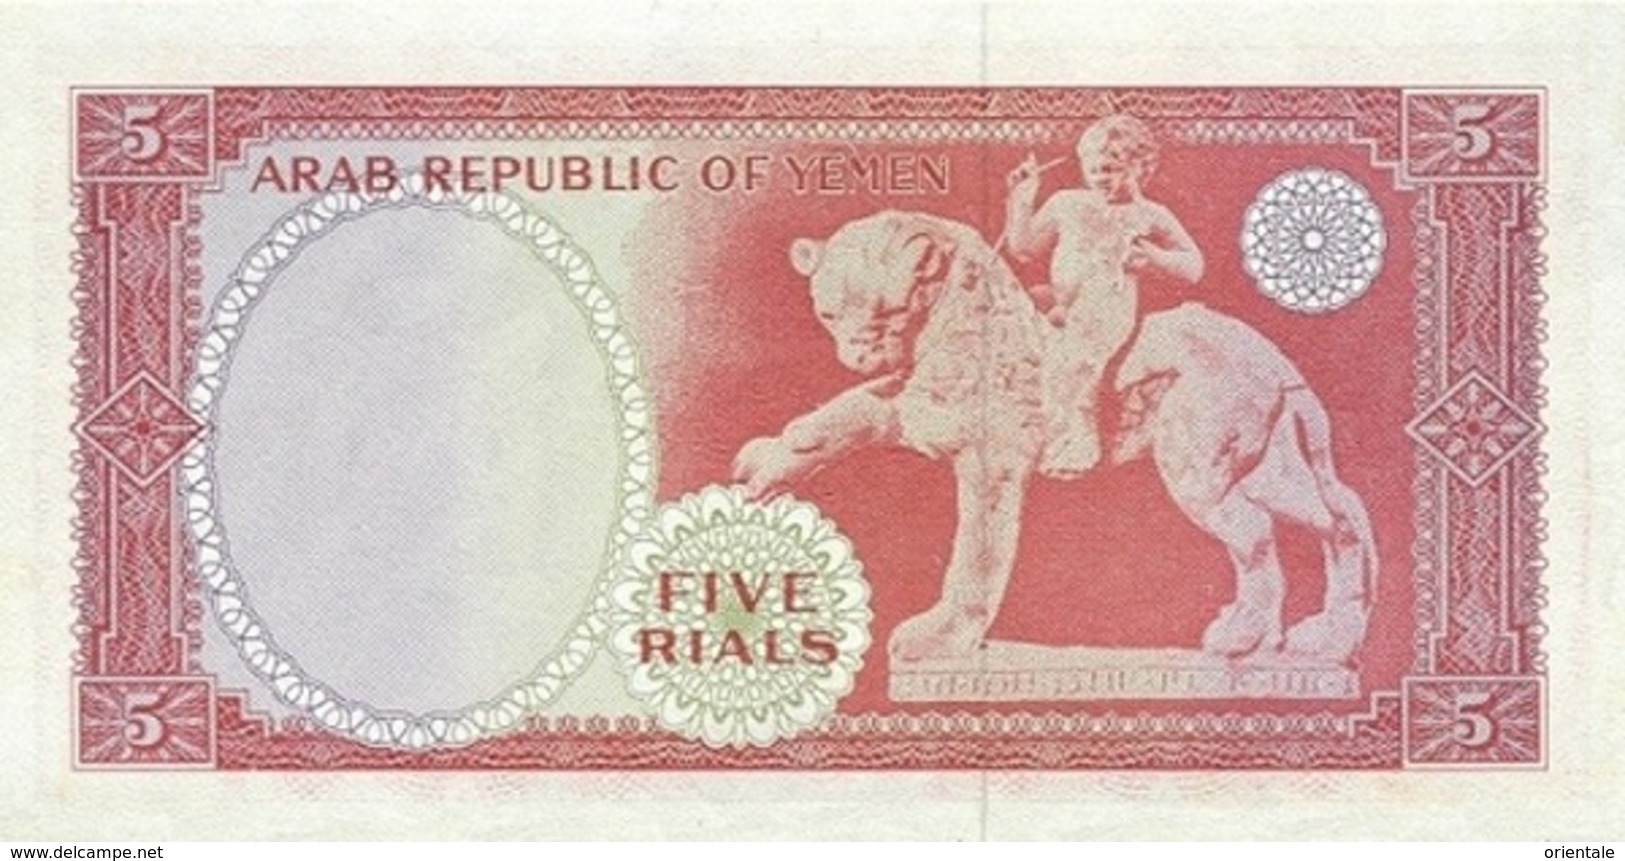 YEMEN ARAB  P. 2b 5 R 1967 UNC - Yemen